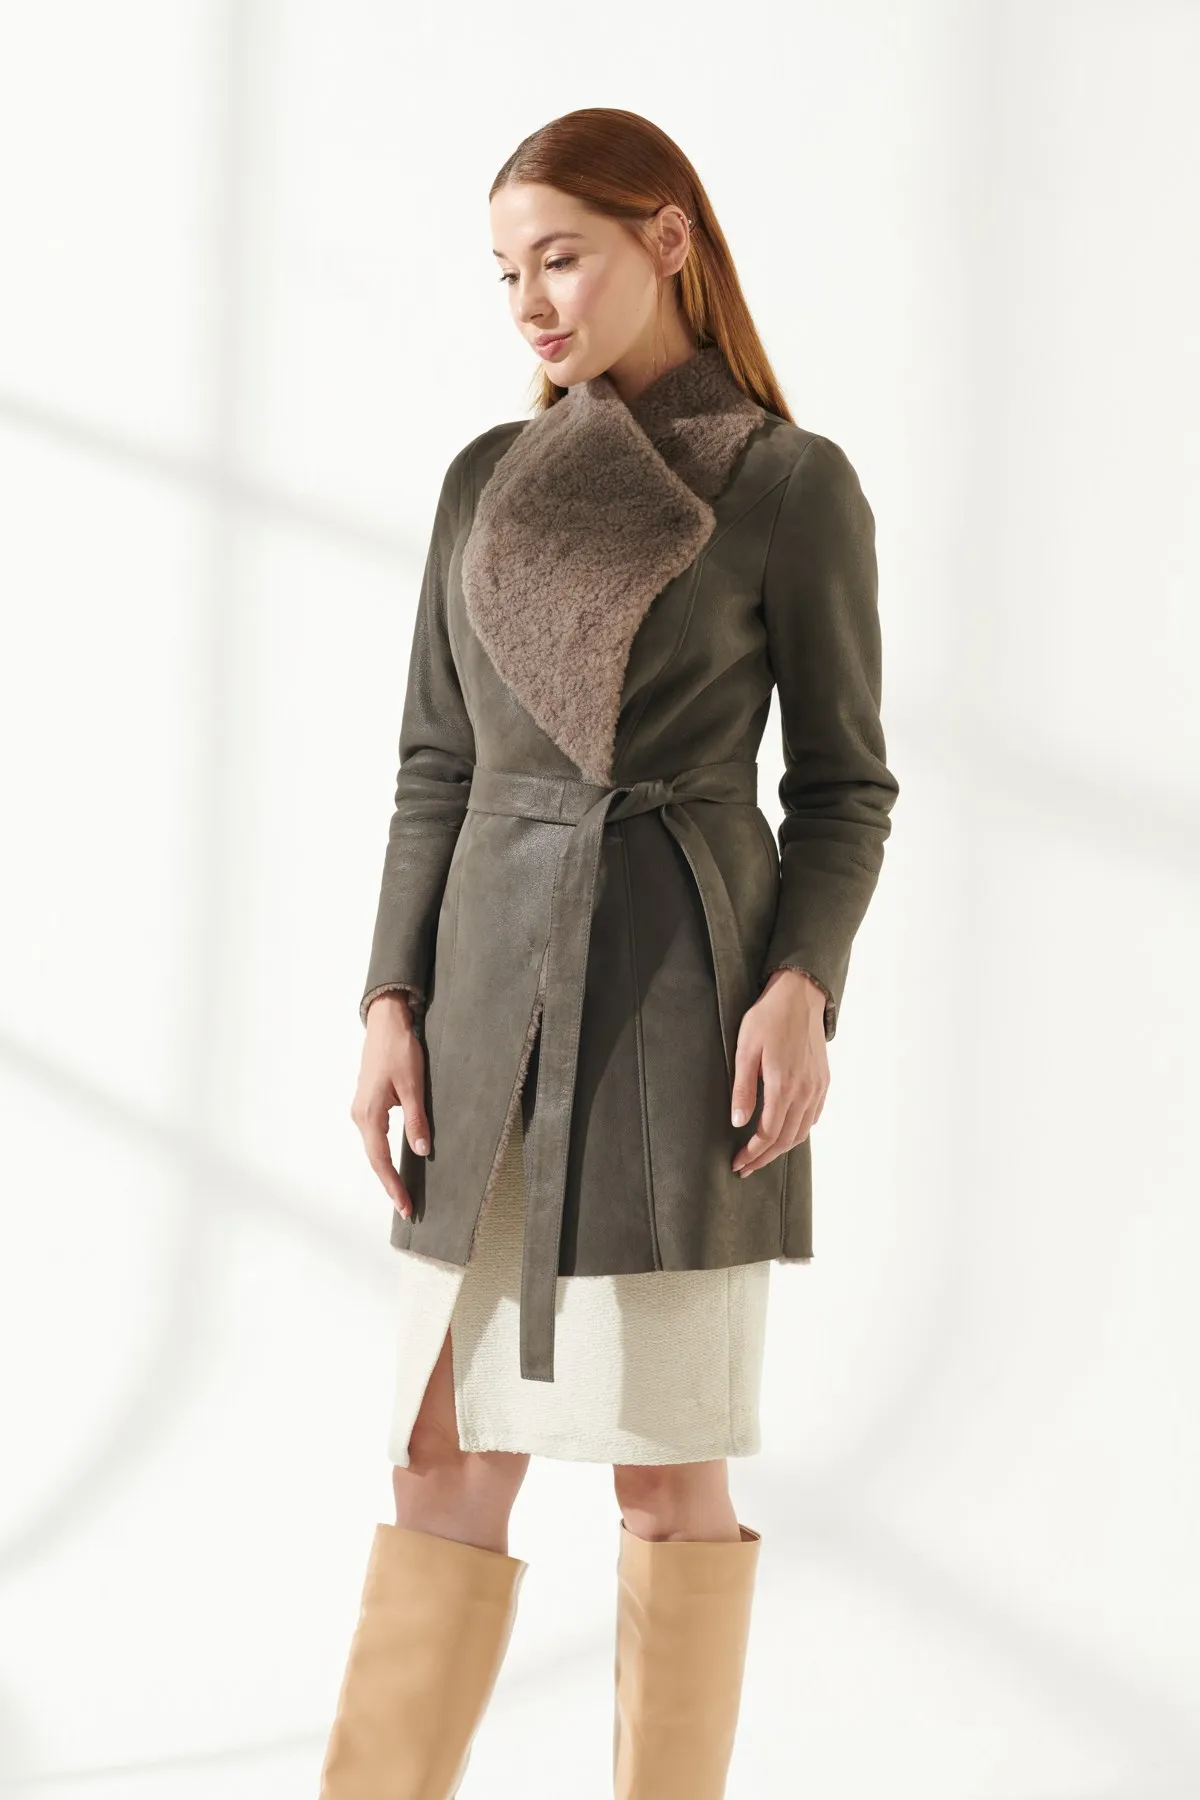 Fur Women 'S Genuine Leather Coat Winter Sheepskin Parka Warm Coat New Season Design Clothing Products Classic Gray Color Türkiyeden enlarge